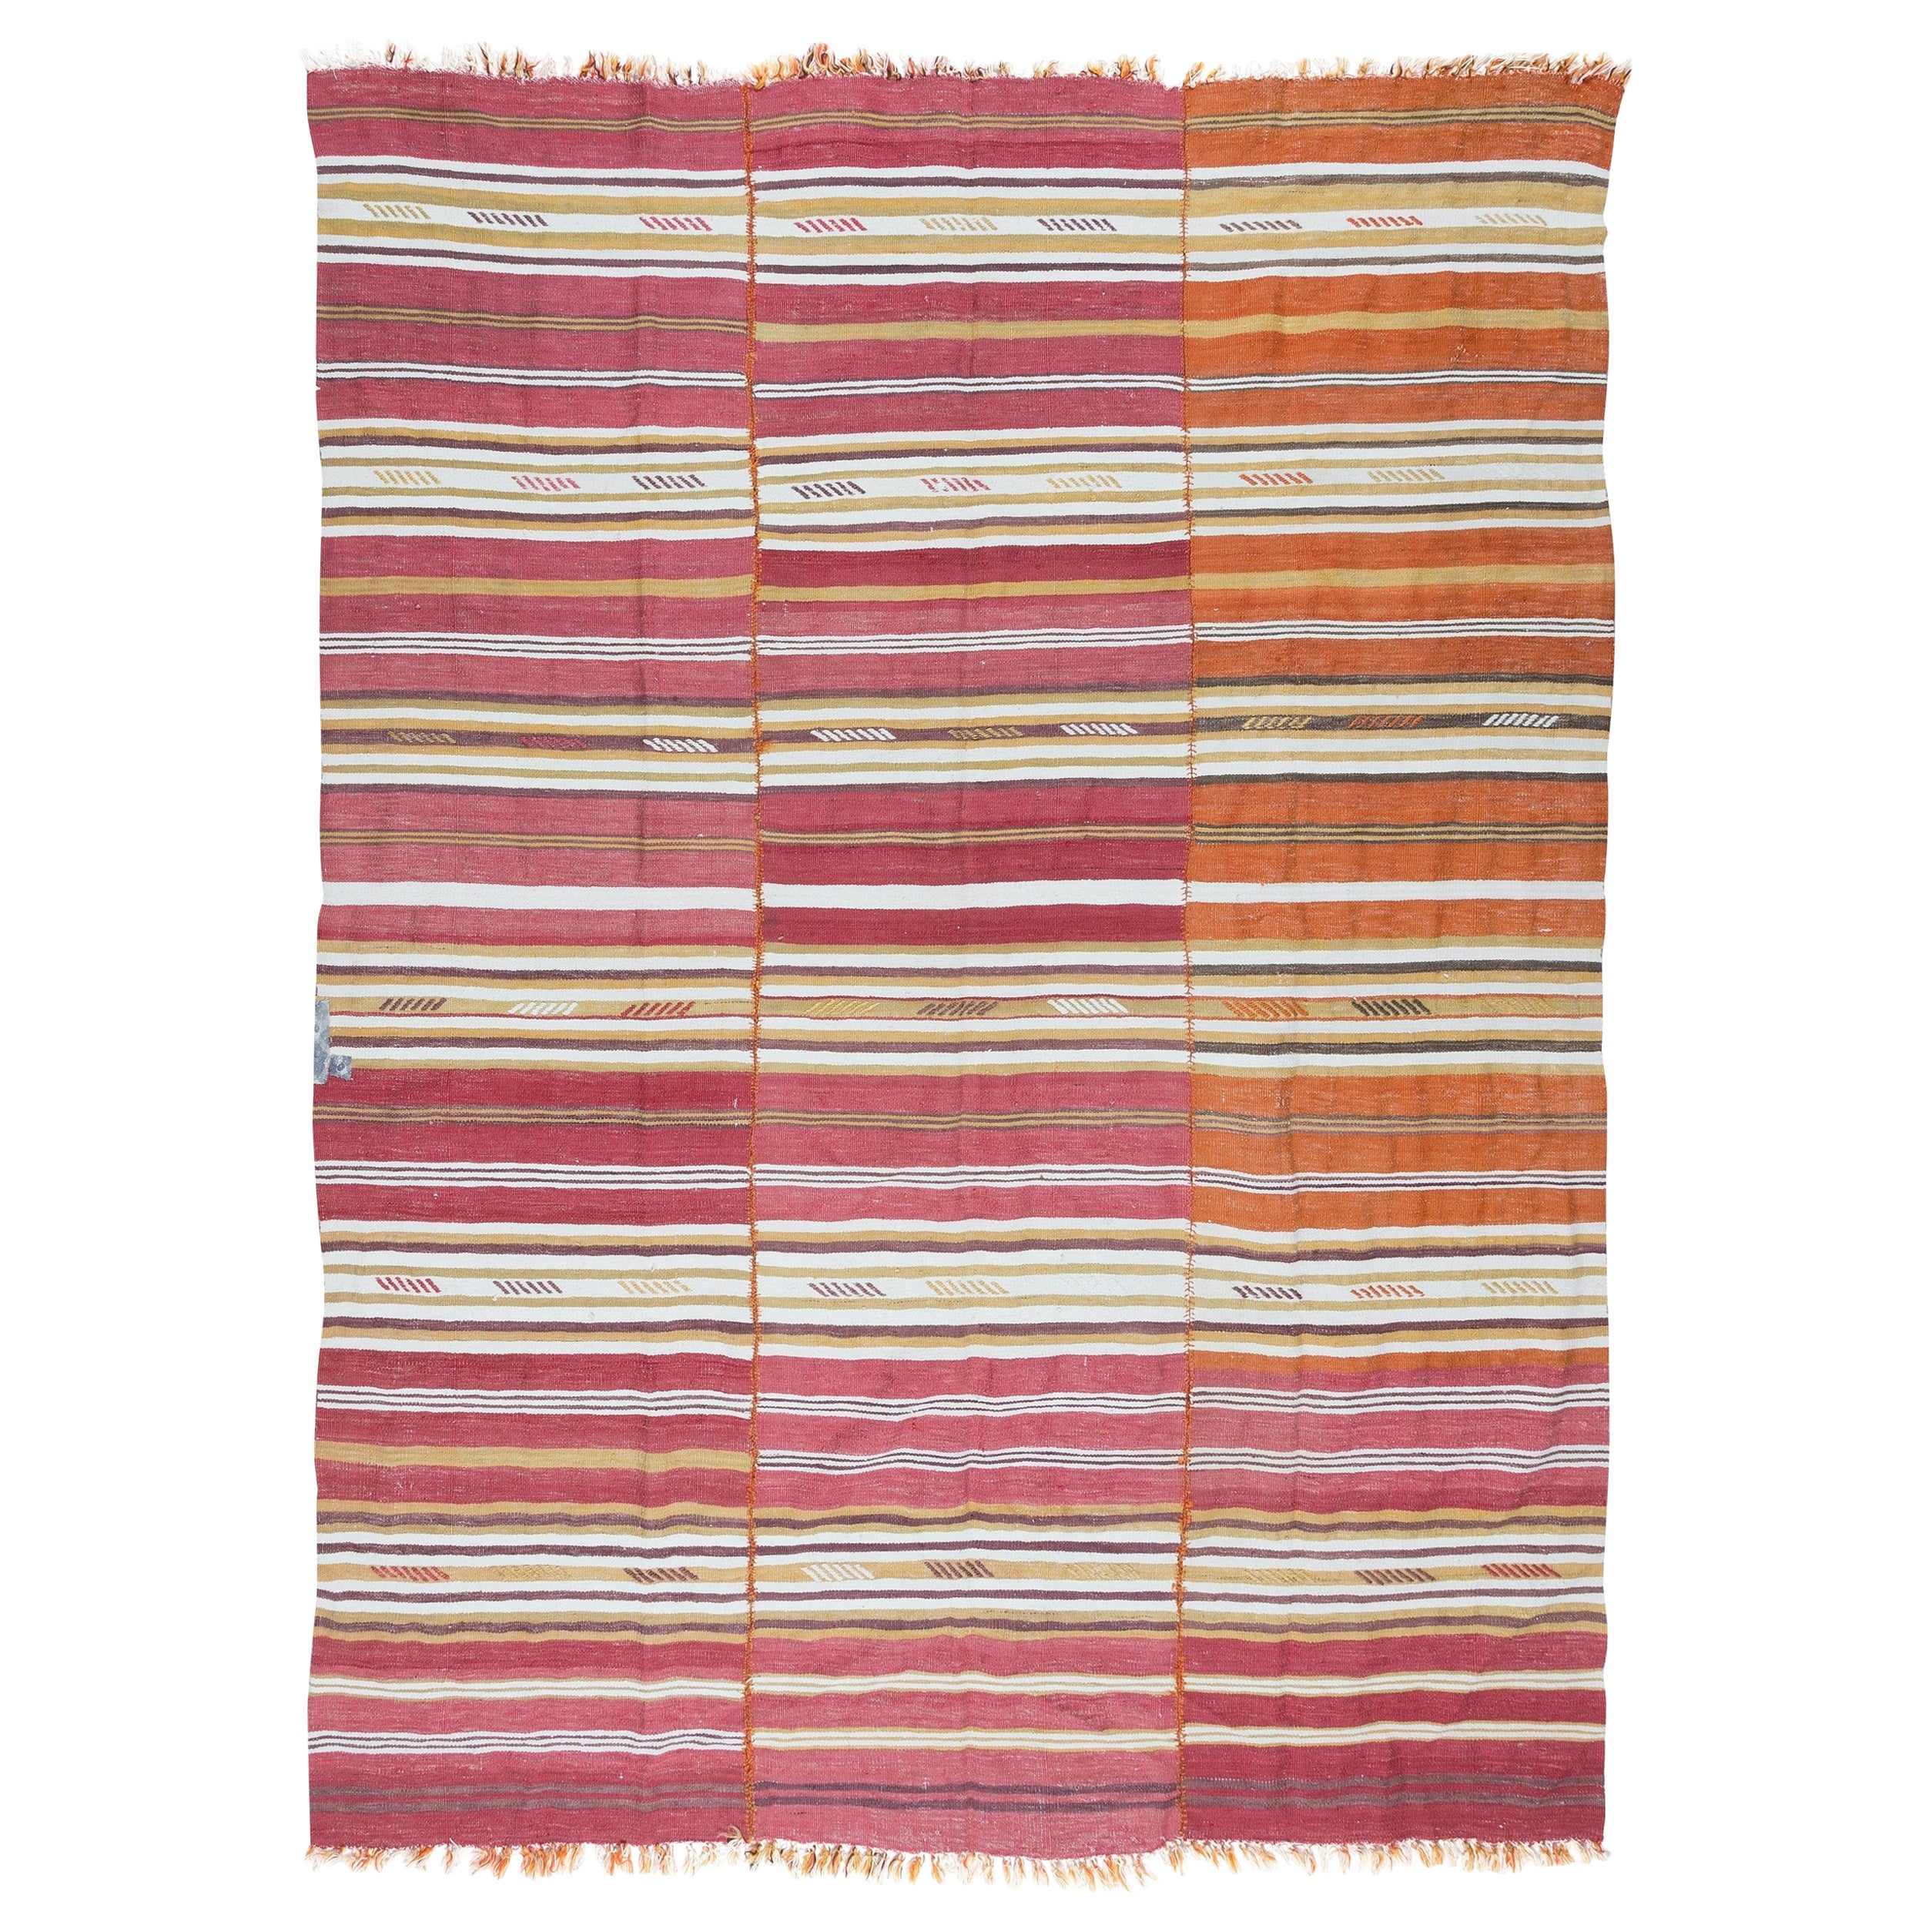 6x8 Ft Hand-Woven Anatolian Kilim, Striped Multicolor Rug, Flat-Weave, 100% Wool